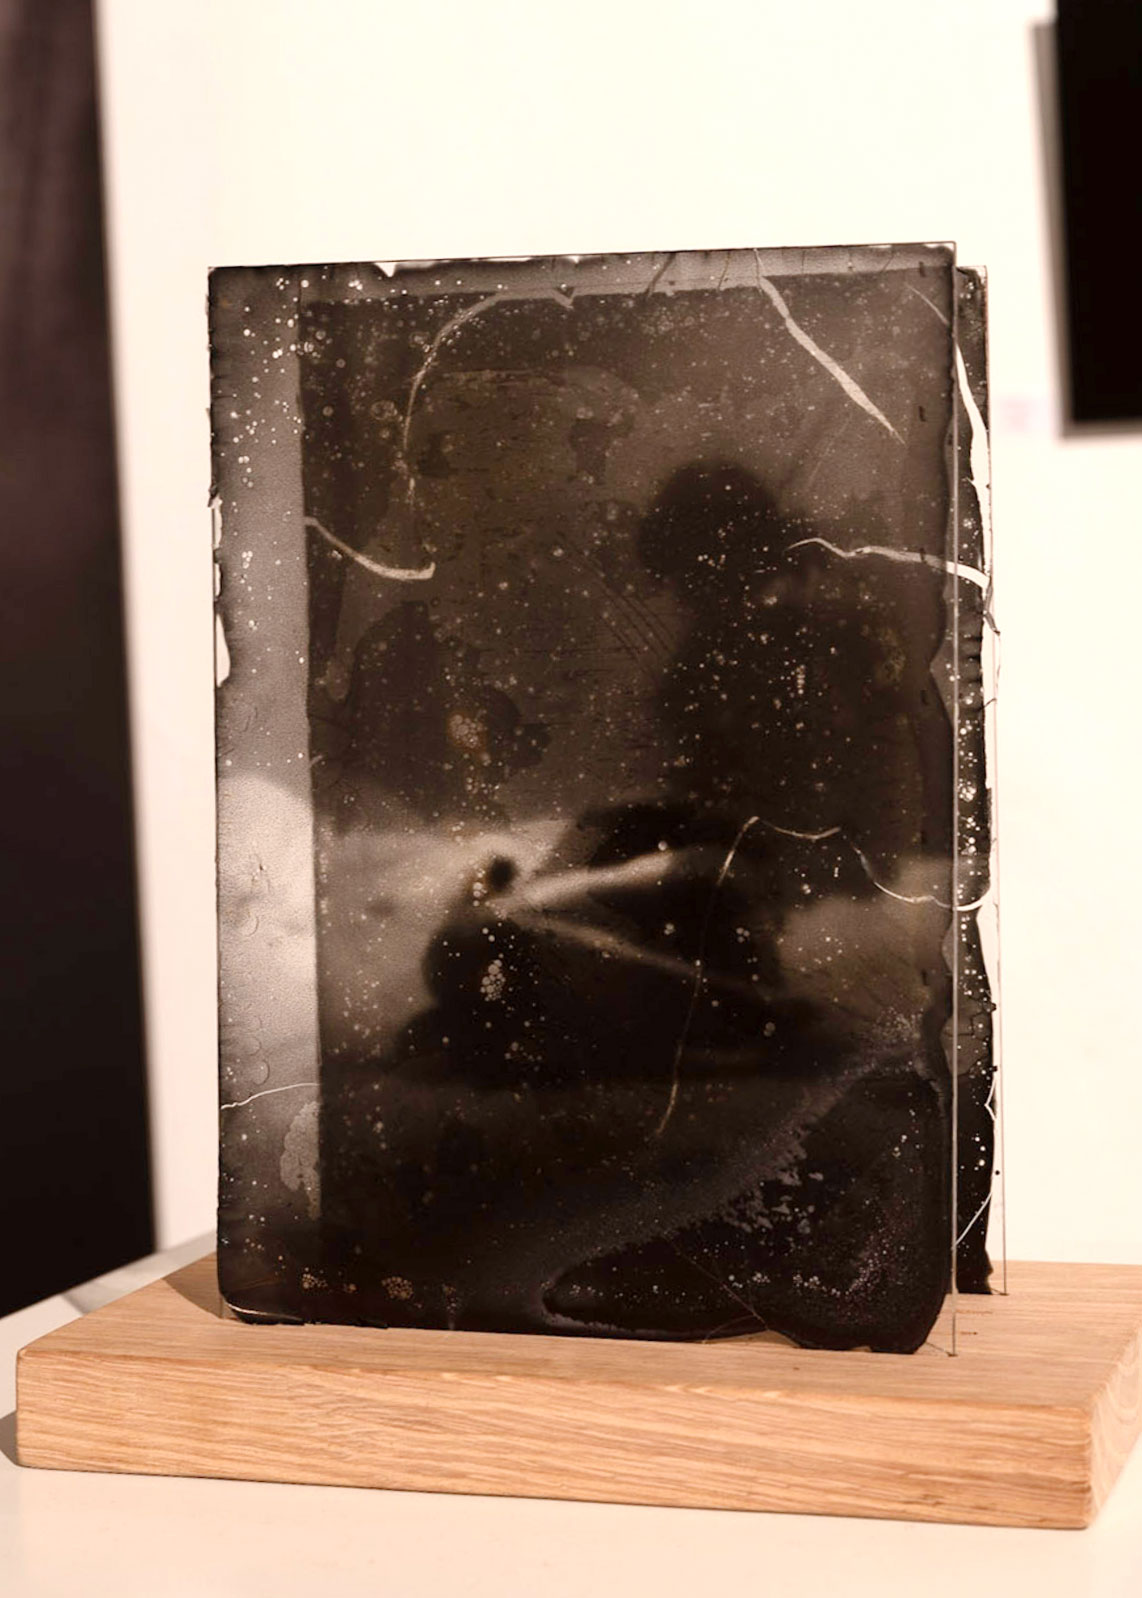 fotoafdruk op glas in blokje van eikenhout Maten glas: 21 x 15 cm